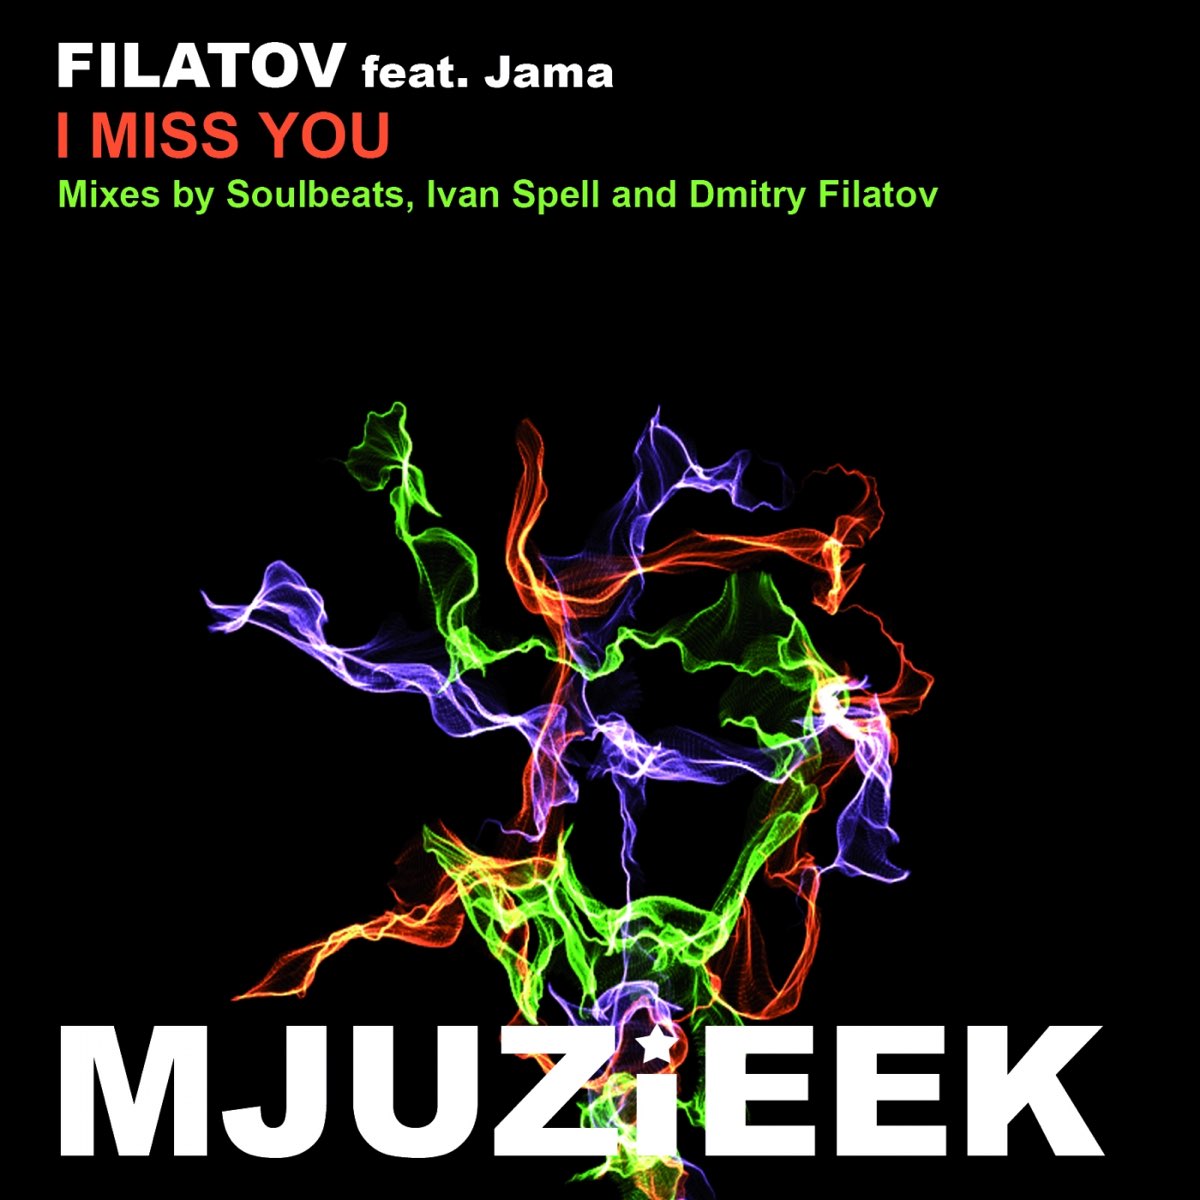 Filatov. Dmitry Filatov feat. Jama музыка. Away filatov